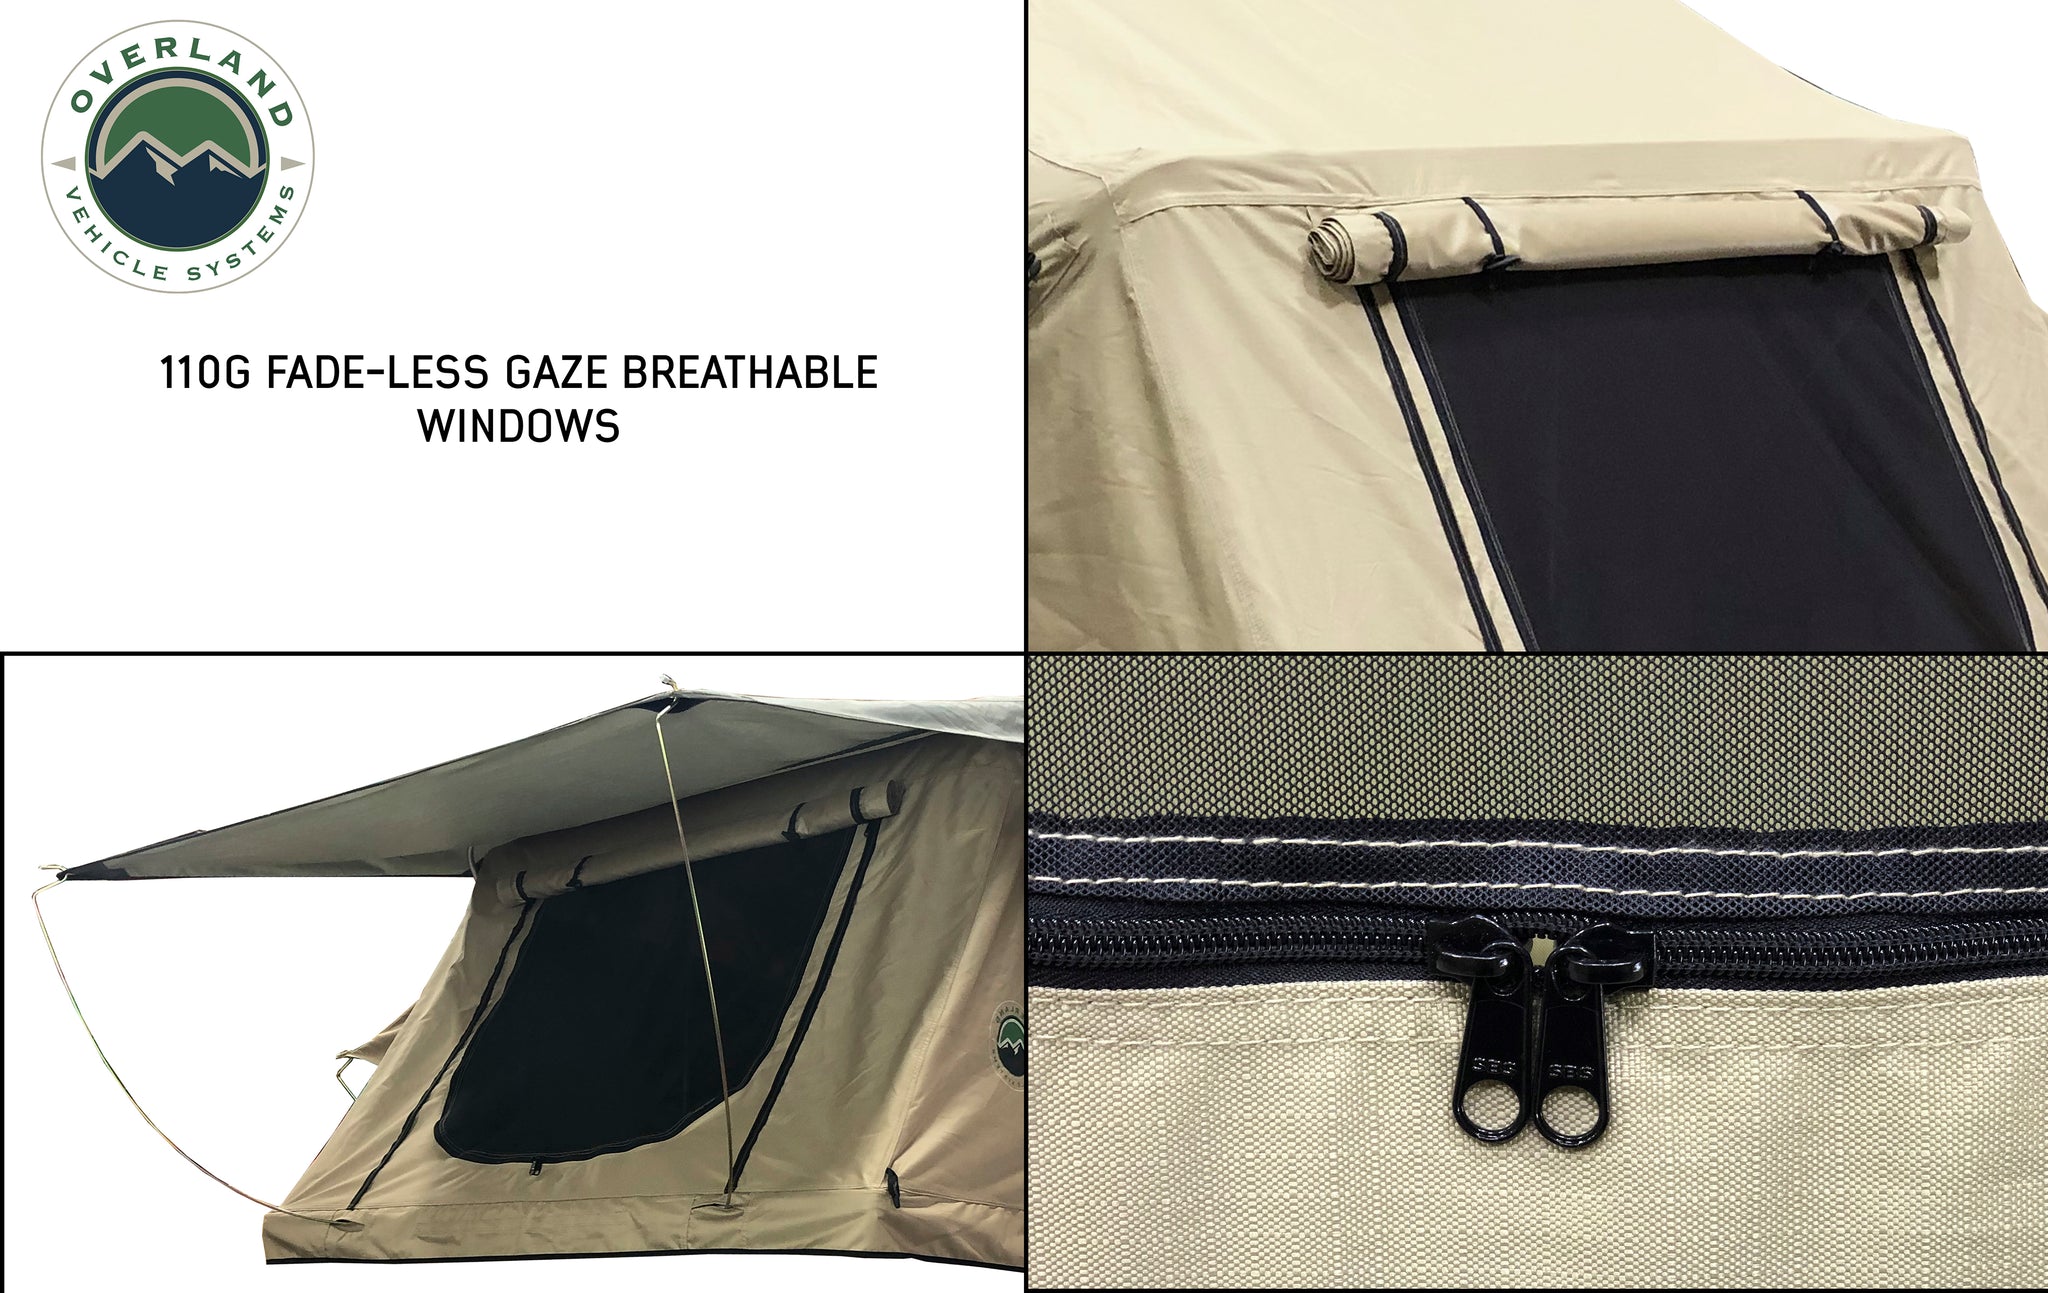  Tusk Tent Pole Bag Black : Automotive